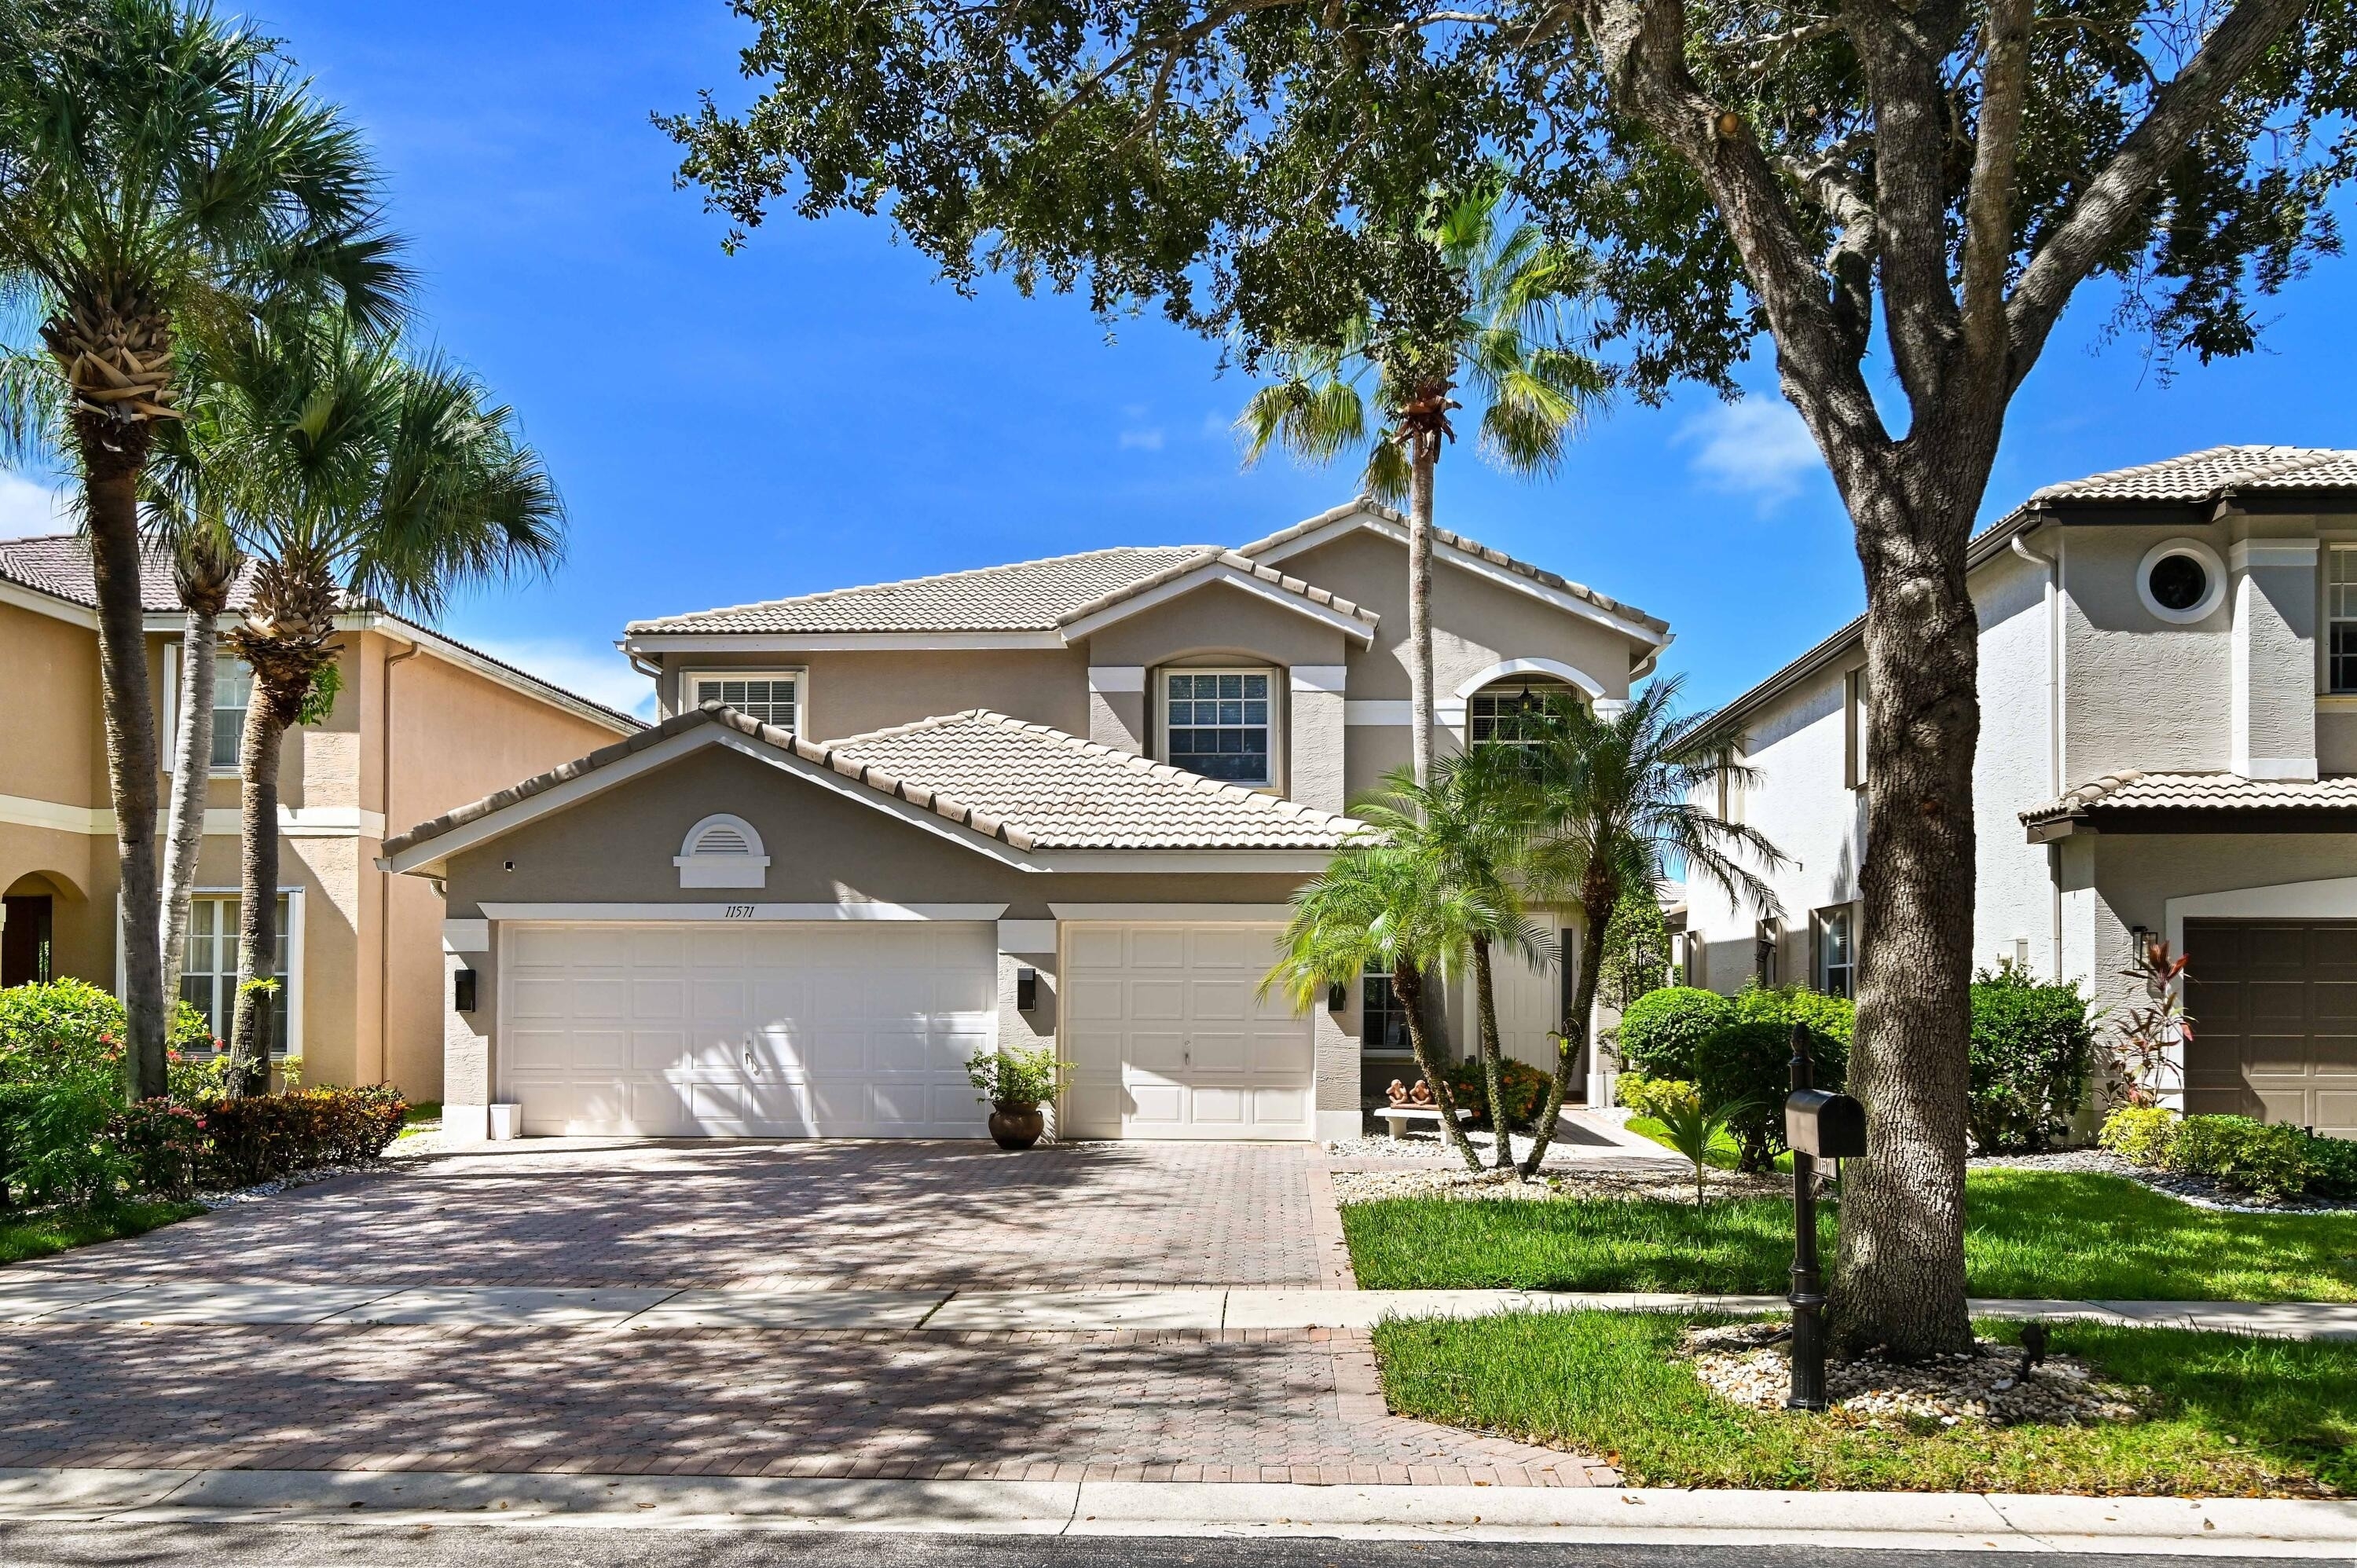 Single Family Home for Sale at Boca Raton, FL 33498